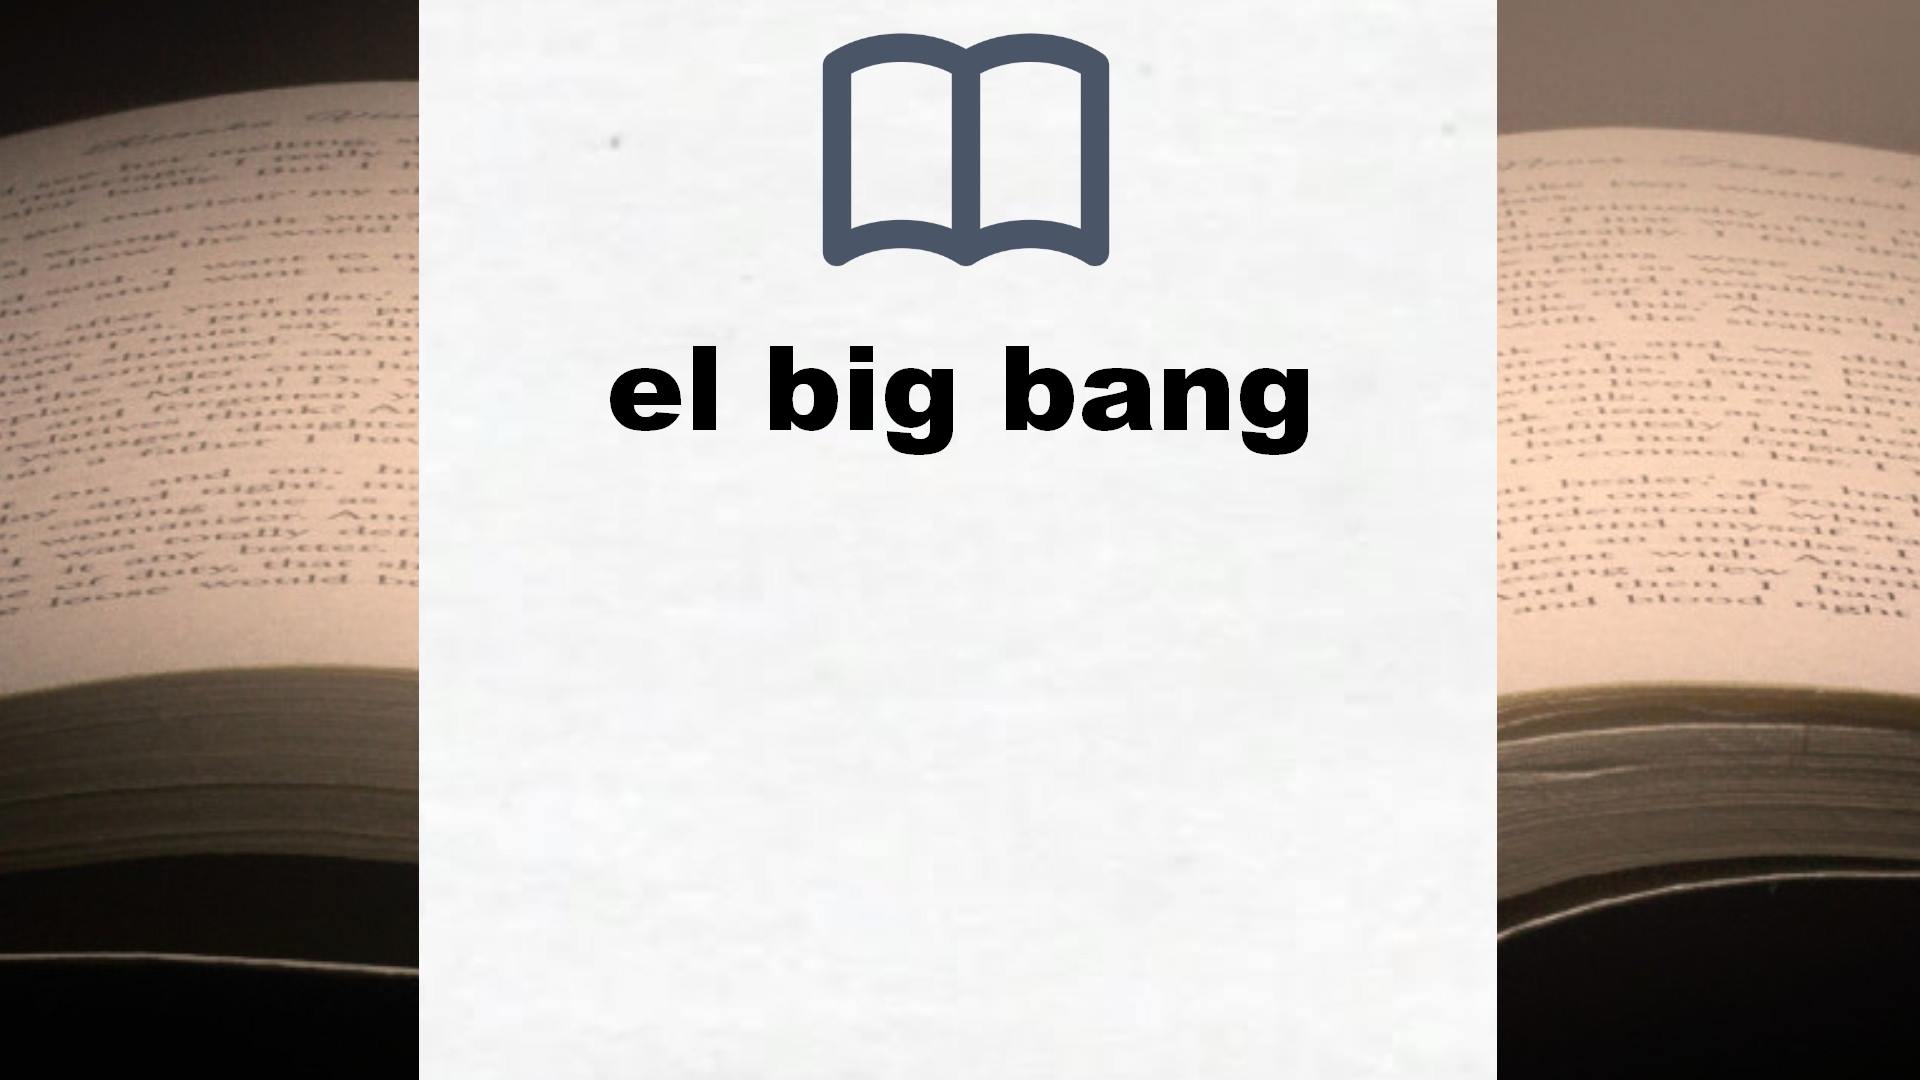 Libros sobre el big bang